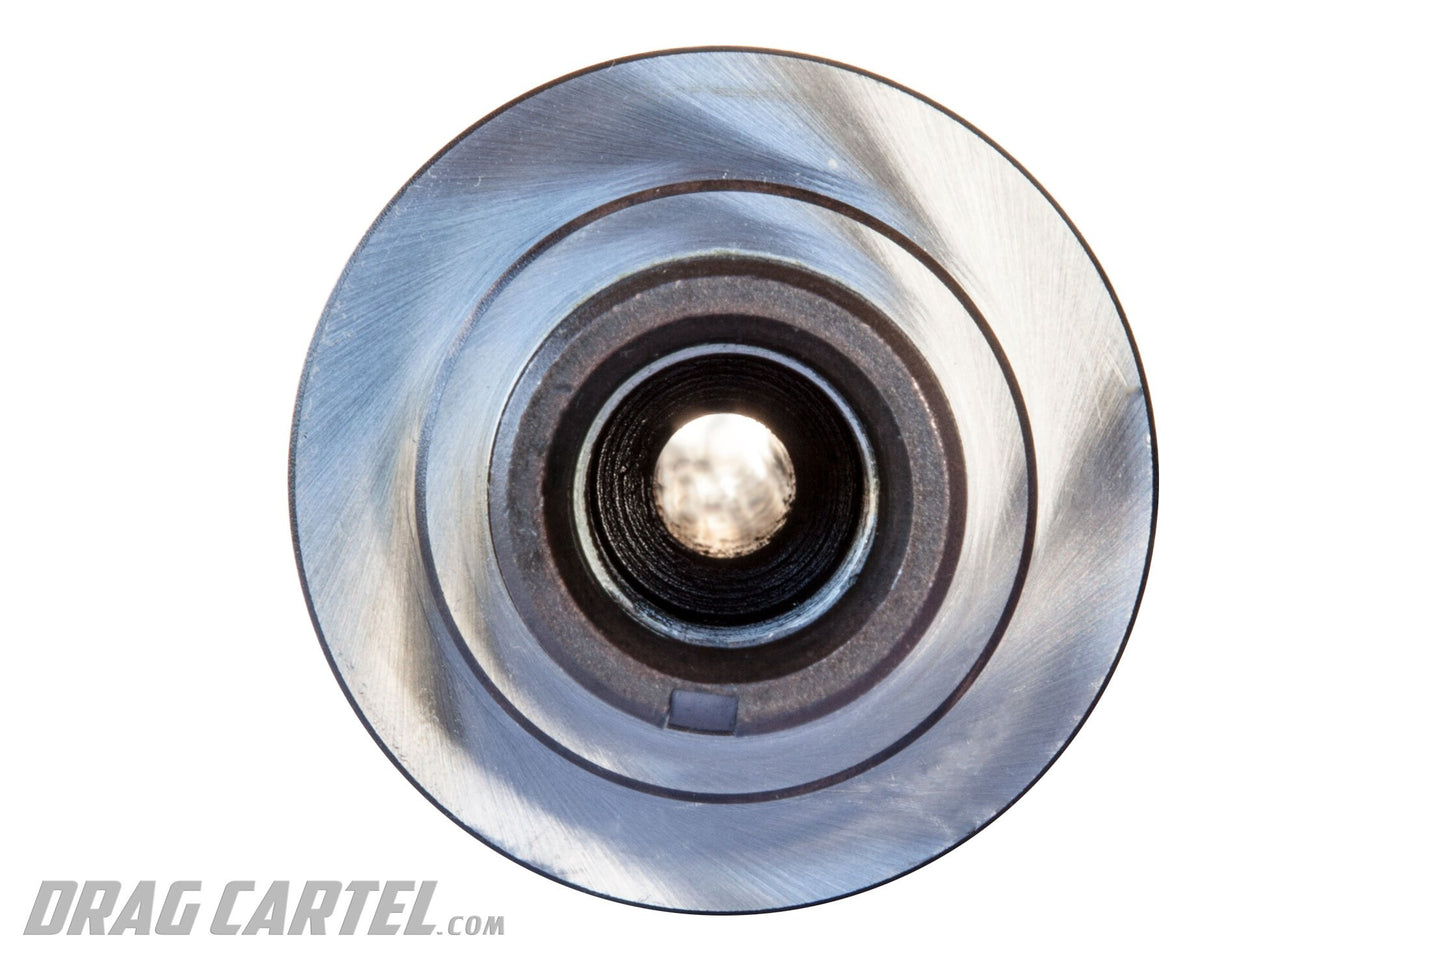 Drag Cartel - Camshafts -  003.2 Street Cams K-Series